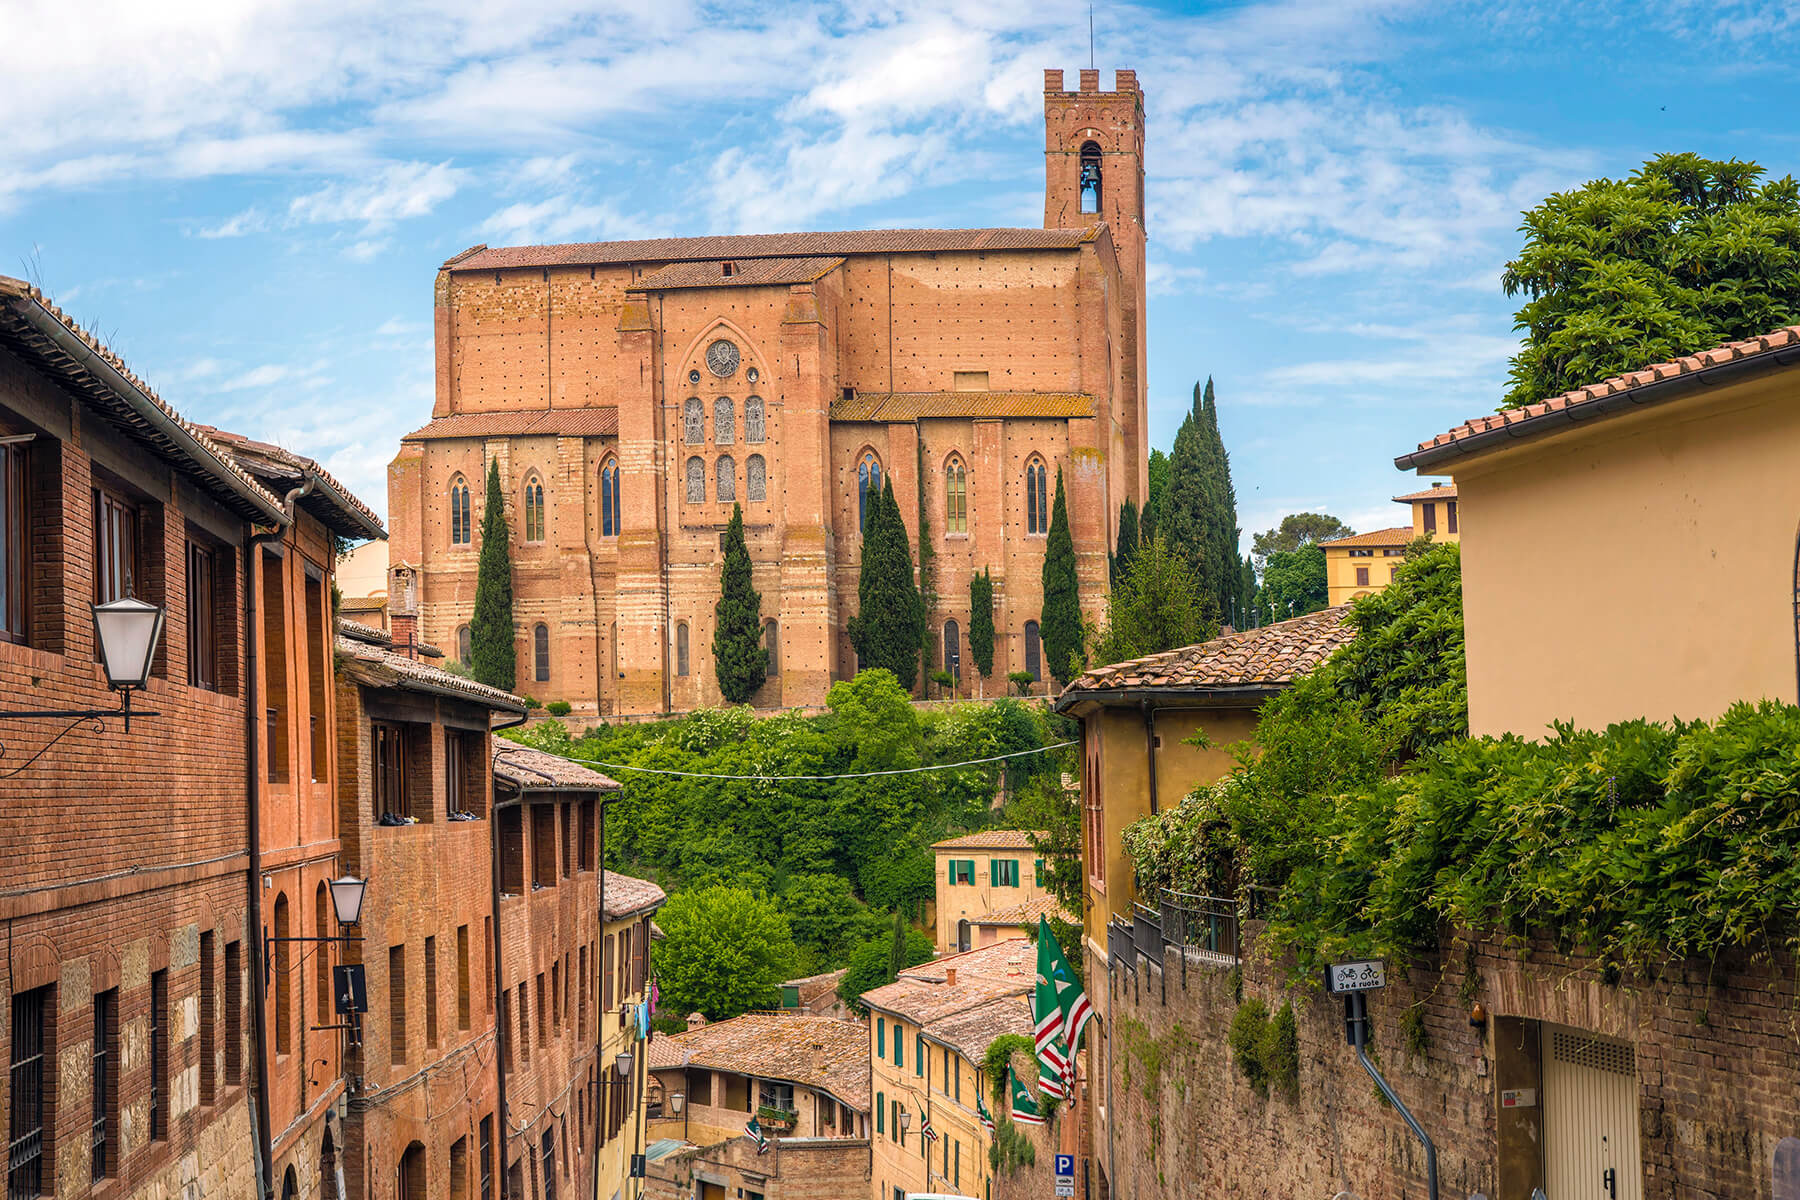 Tour du lịch Siena trọn gói 2022/2023 167080